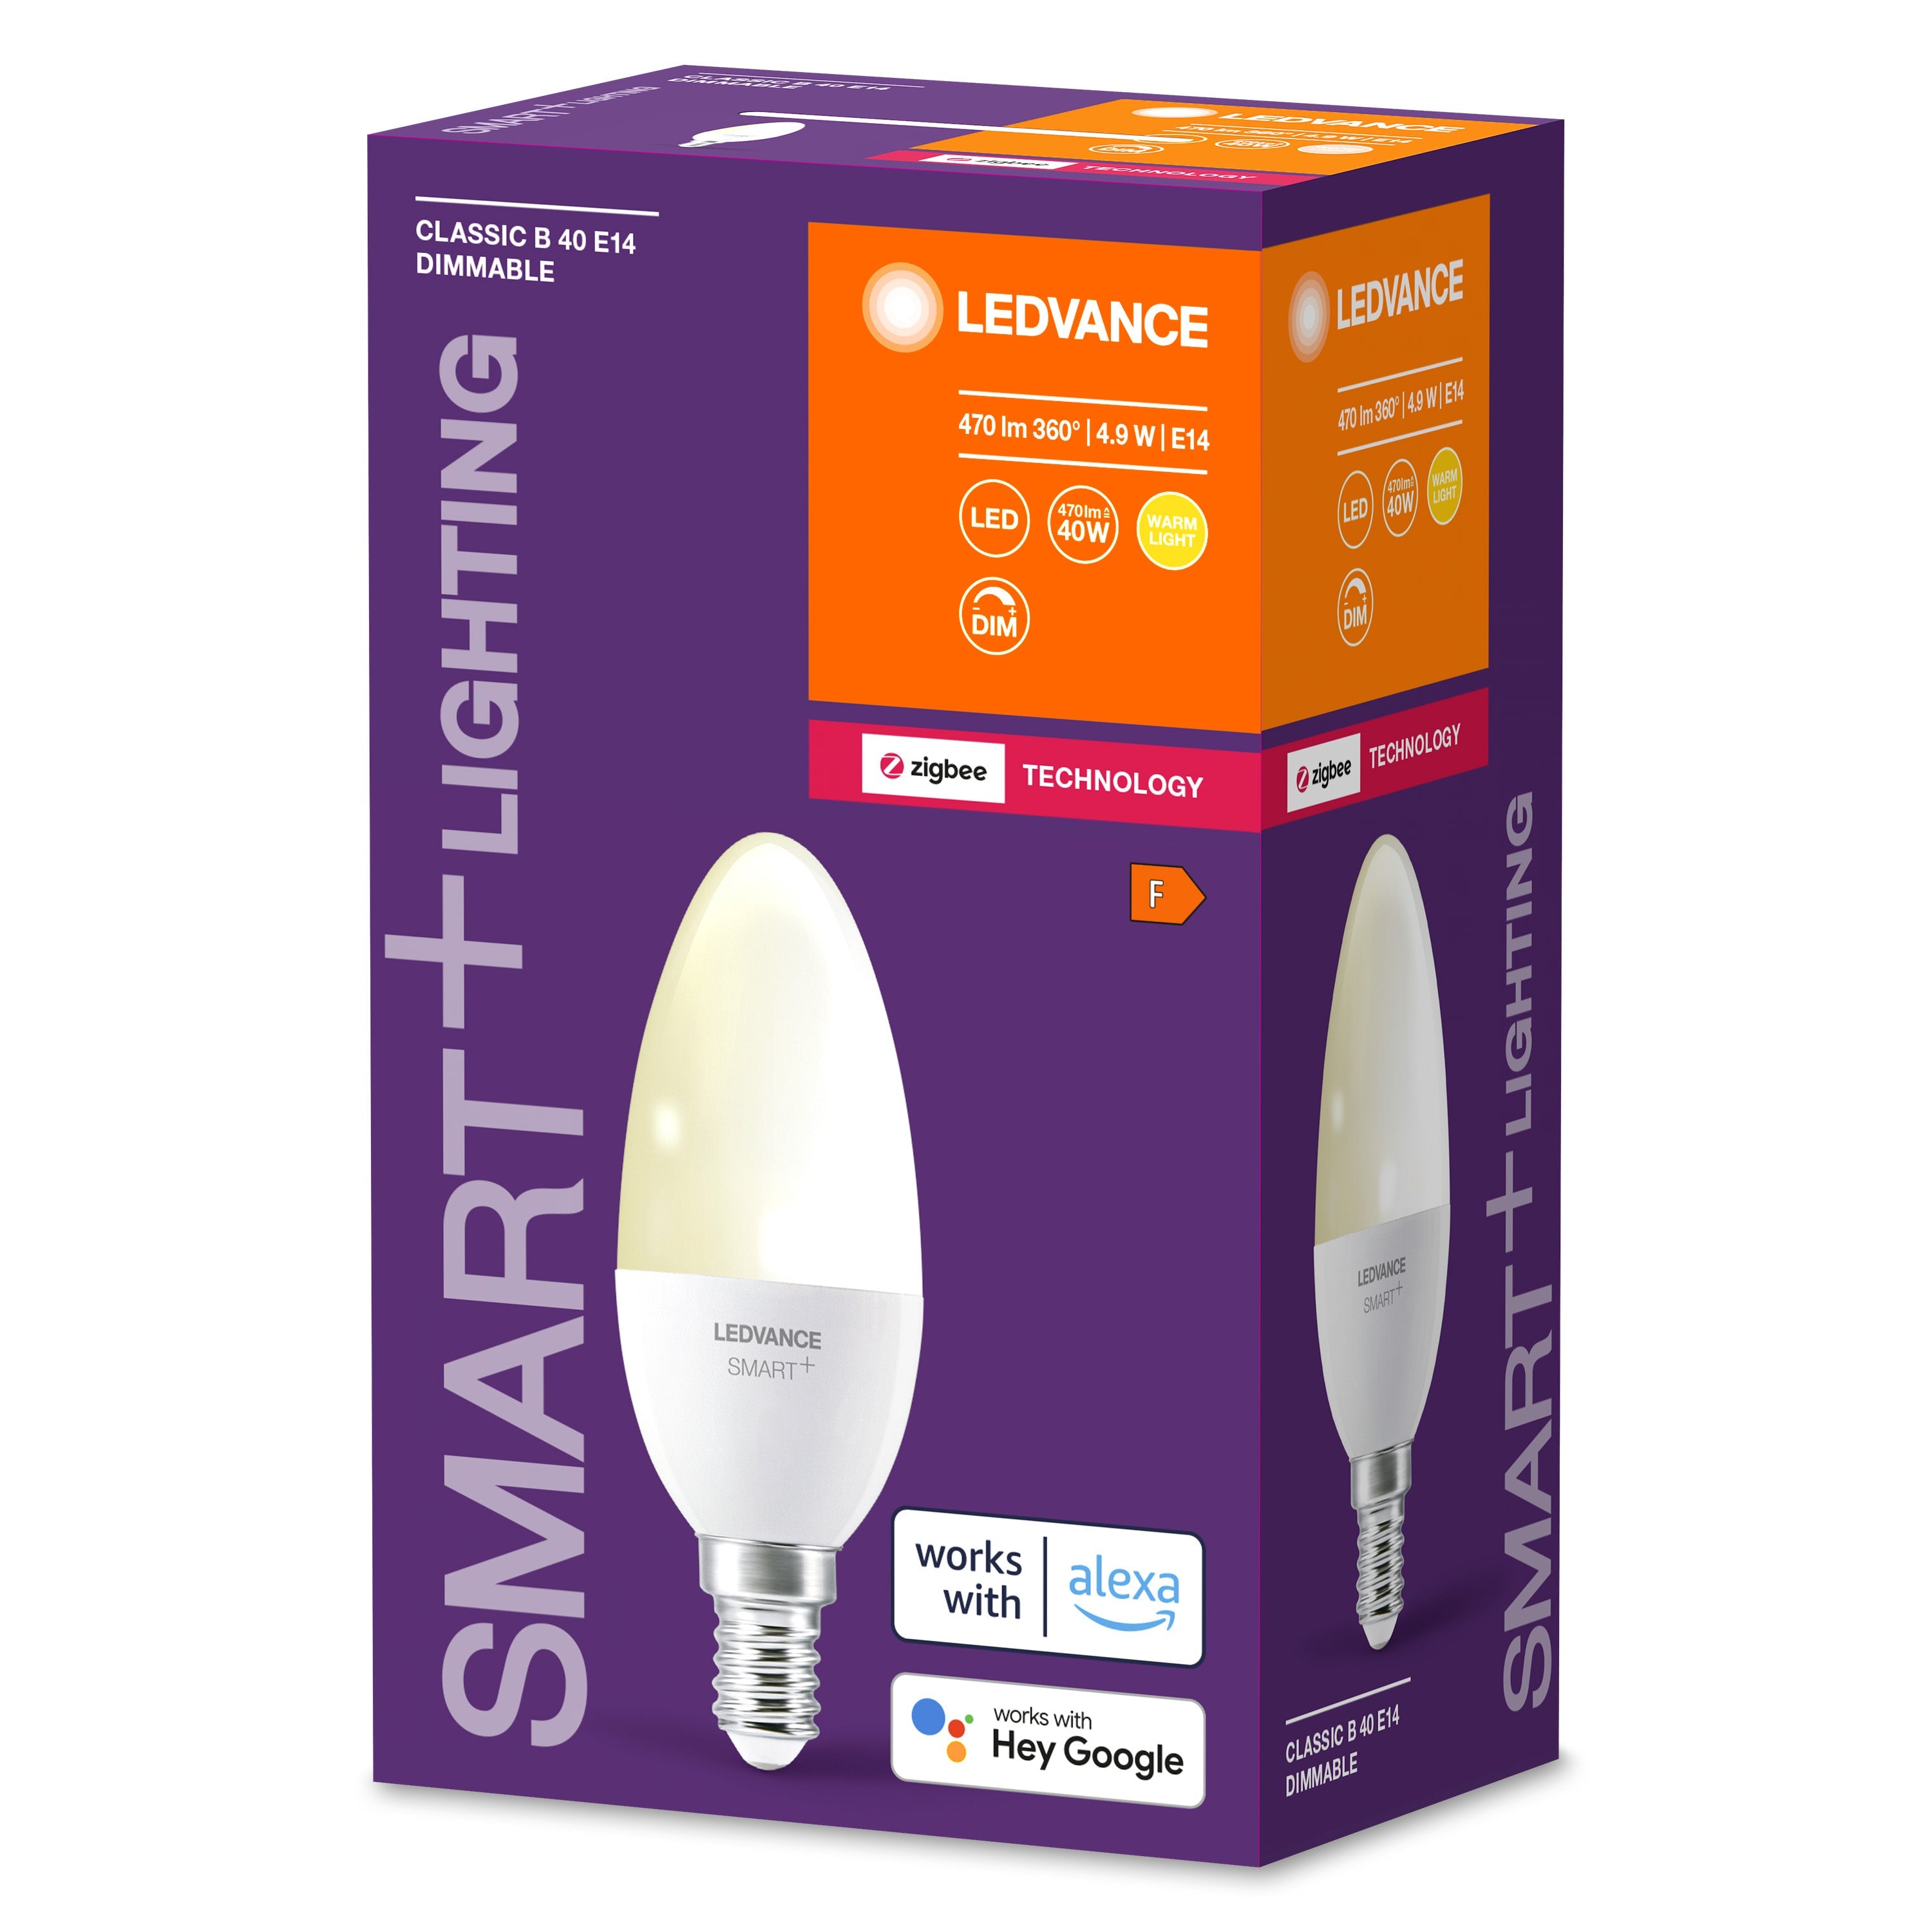 LEDVANCE ZigBee SMART+ Candle Dimmable 40 5 W/2700K E14-LEDVANCE-LEDVANCE Shop; LEDVANCE ZigBee SMART+ Candle Dimmable 40 5 W/2700K E14-LEDVANCE-LEDVANCE Shop; LEDVANCE ZigBee SMART+ Candle Dimmable 40 5 W/2700K E14-LEDVANCE-LEDVANCE Shop; LEDVANCE ZigBee SMART+ Candle Dimmable 40 5 W/2700K E14-LEDVANCE-LEDVANCE Shop; LEDVANCE ZigBee SMART+ Candle Dimmable 40 5 W/2700K E14-LEDVANCE-LEDVANCE Shop; ; ; ; LEDVANCE ZigBee SMART+ Candle Dimmable 40 5 W/2700K E14-LEDVANCE-LEDVANCE Shop; LEDVANCE ZigBee SMART+ Can